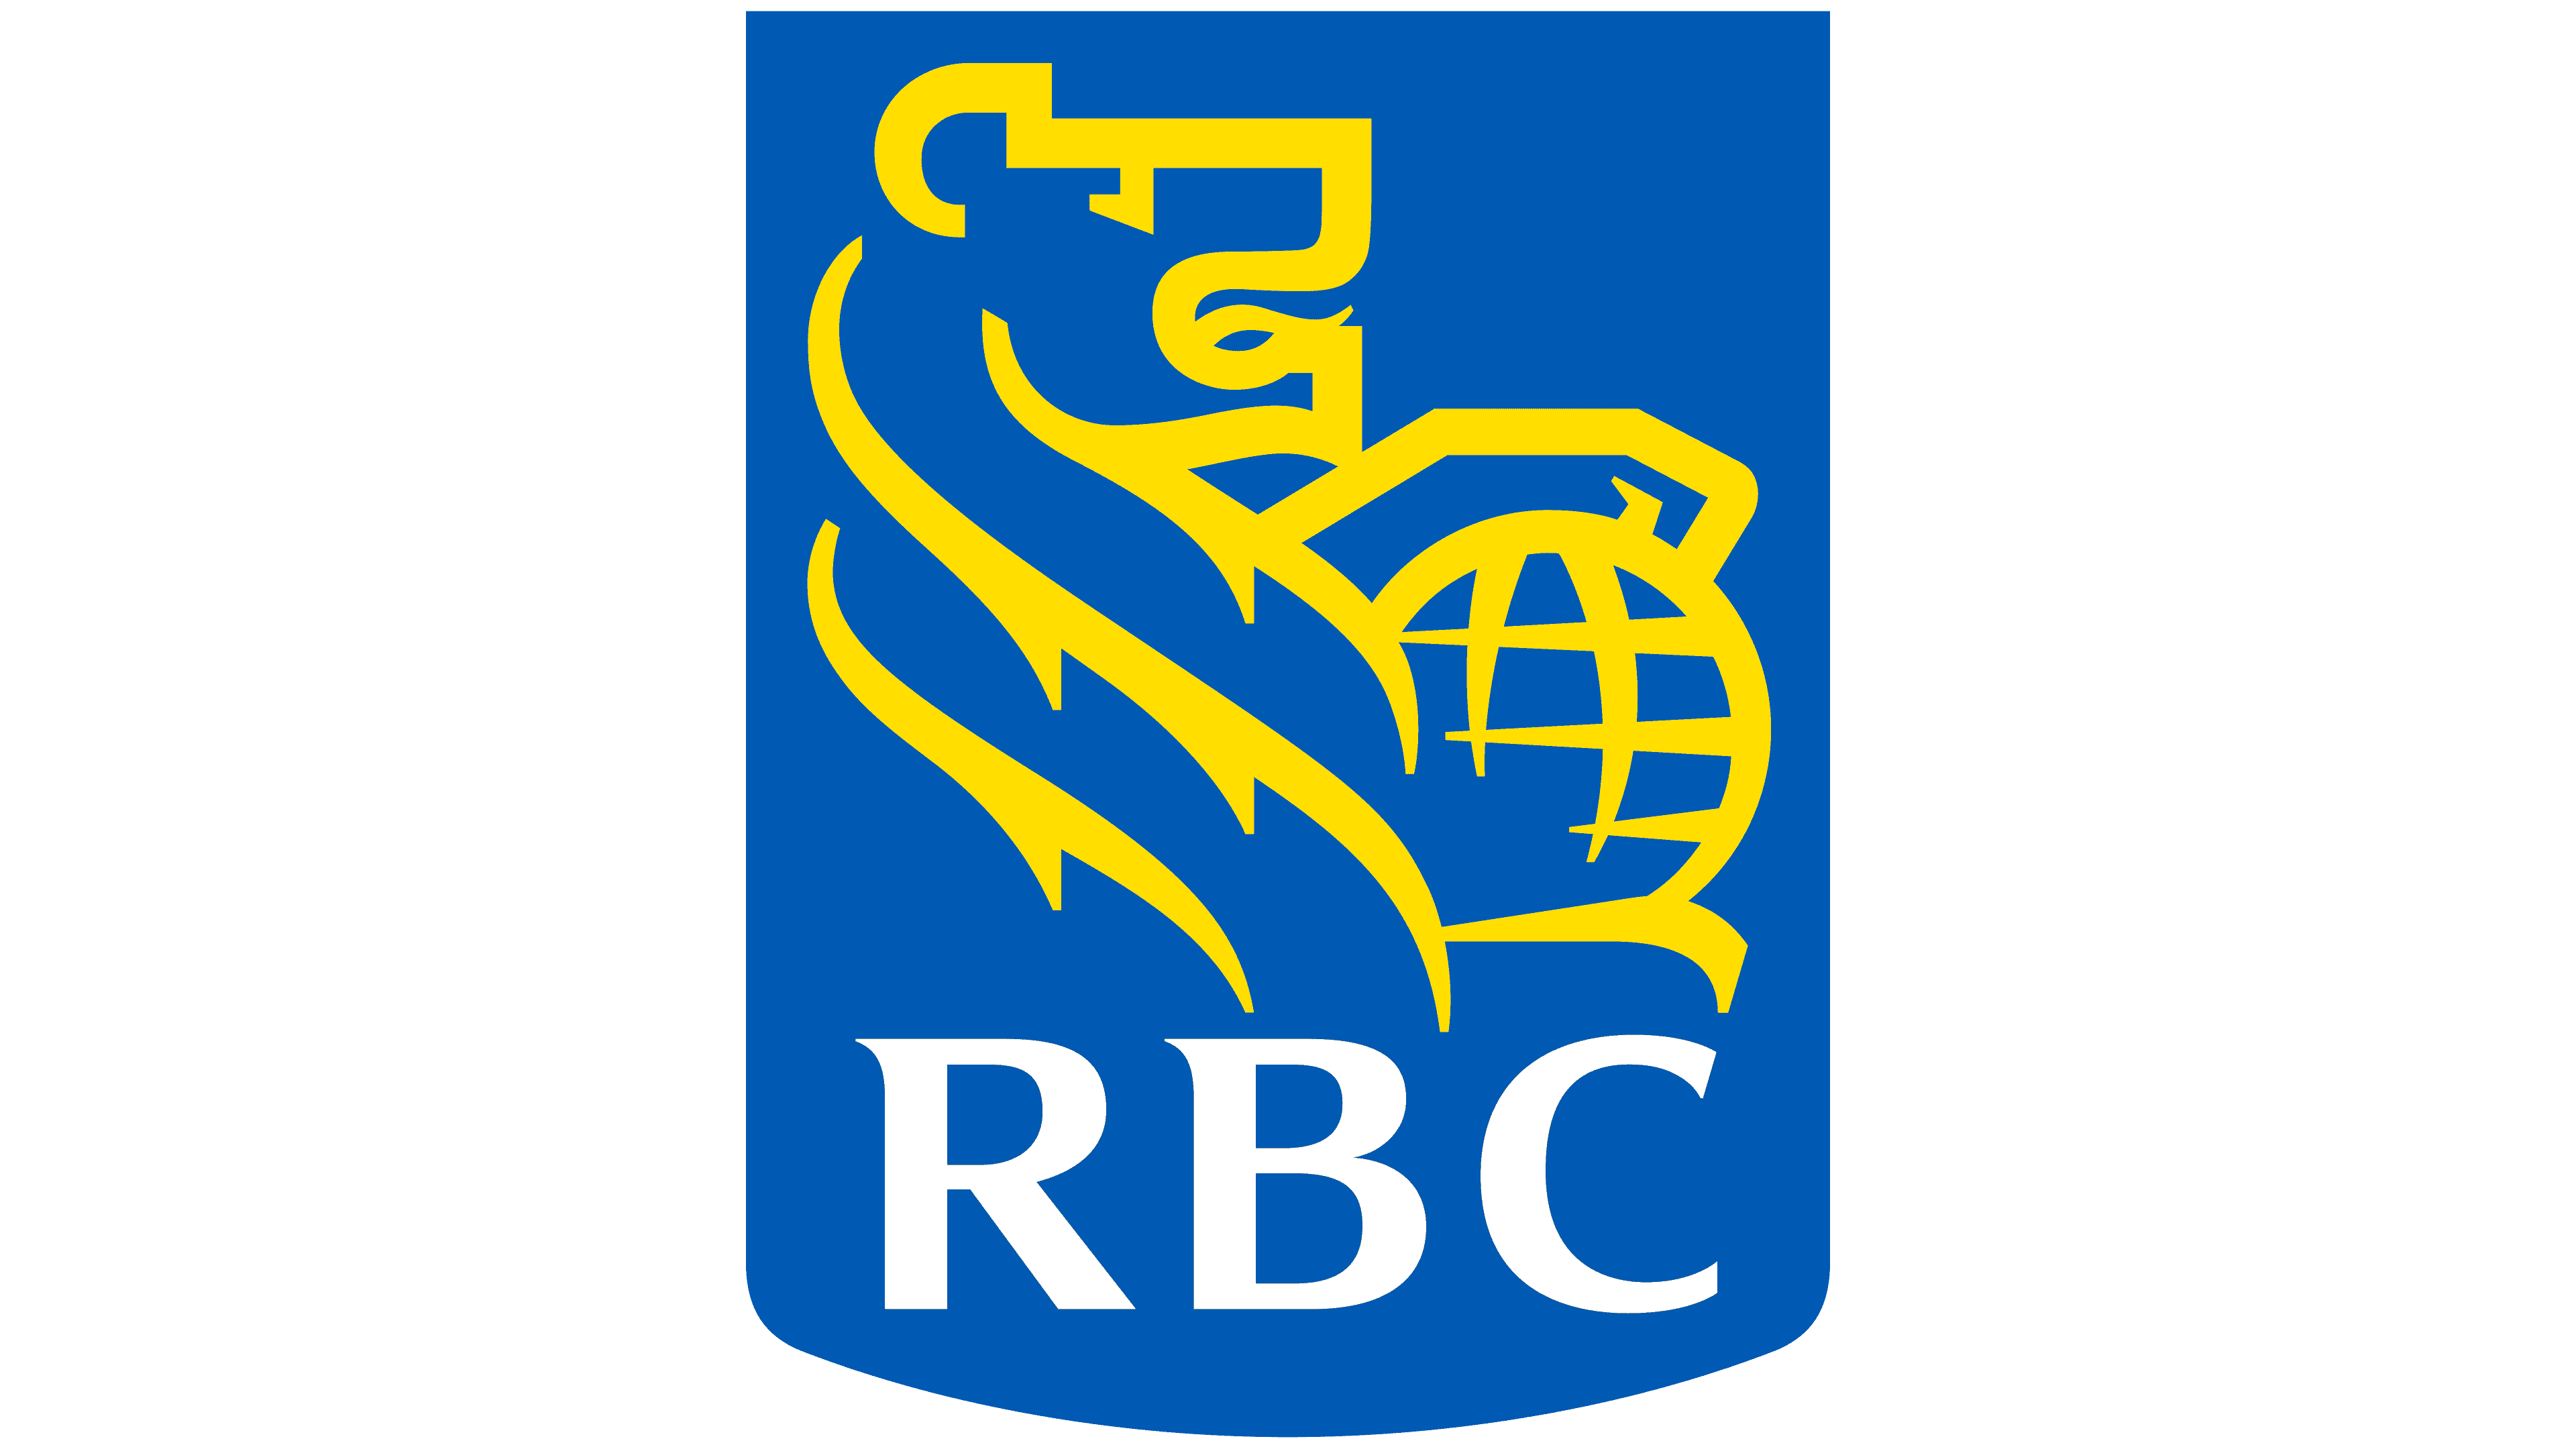 RBC Royal Bank - Canadian Franchise Association - Canadian Economic Outlook